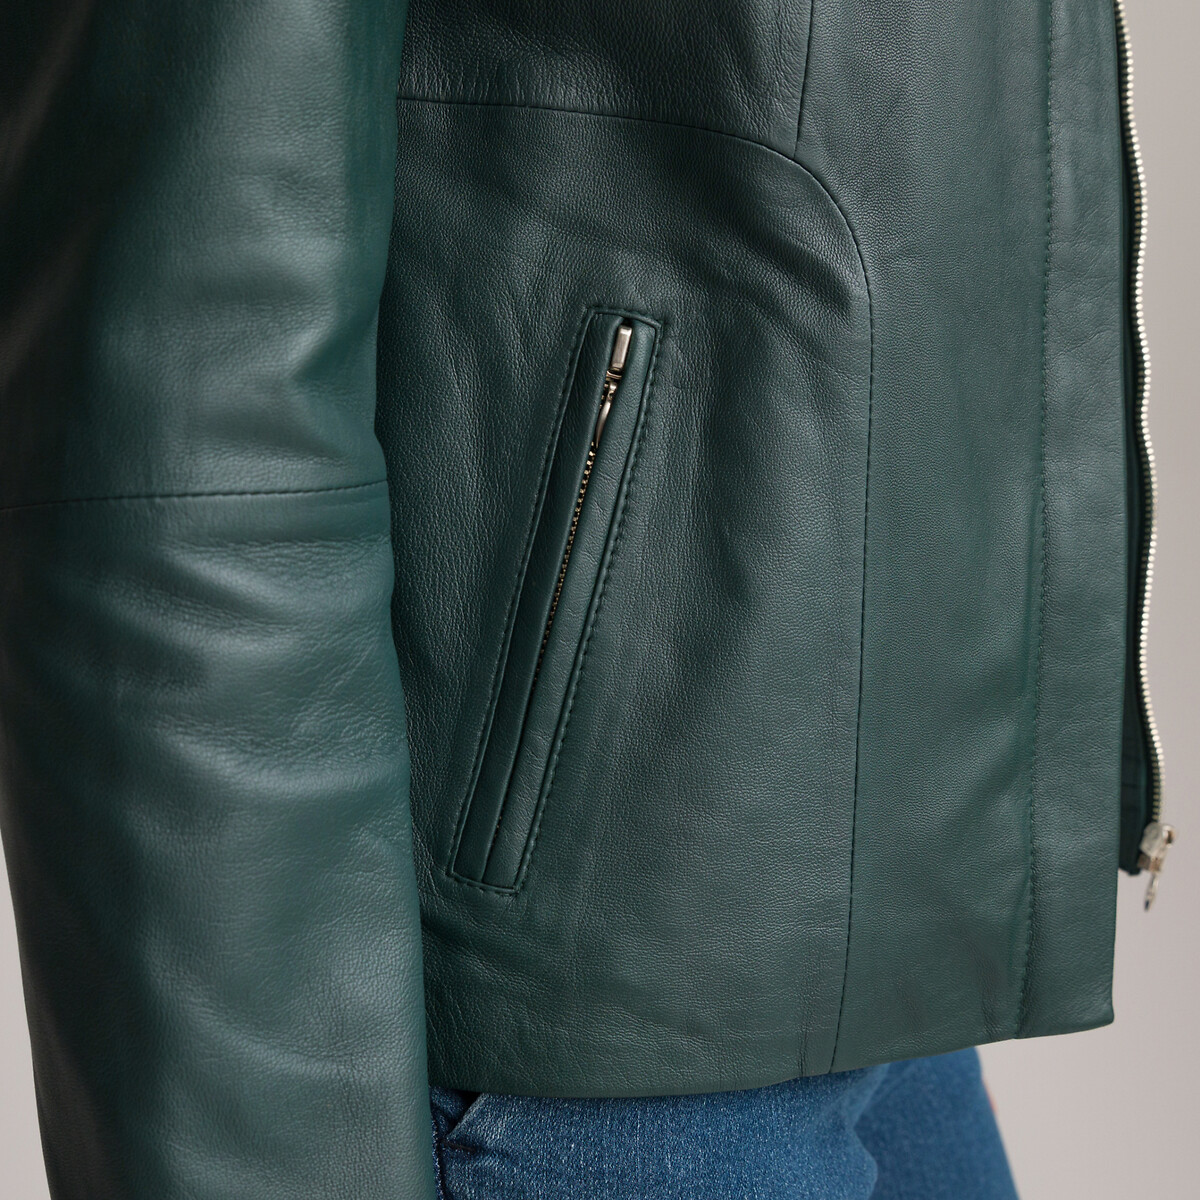 Куртка ANNE WEYBURN Куртка Короткая из кожи ягненка 54 (FR) - 60 (RUS) зеленый, размер 54 (FR) - 60 (RUS) Куртка Короткая из кожи ягненка 54 (FR) - 60 (RUS) зеленый - фото 2